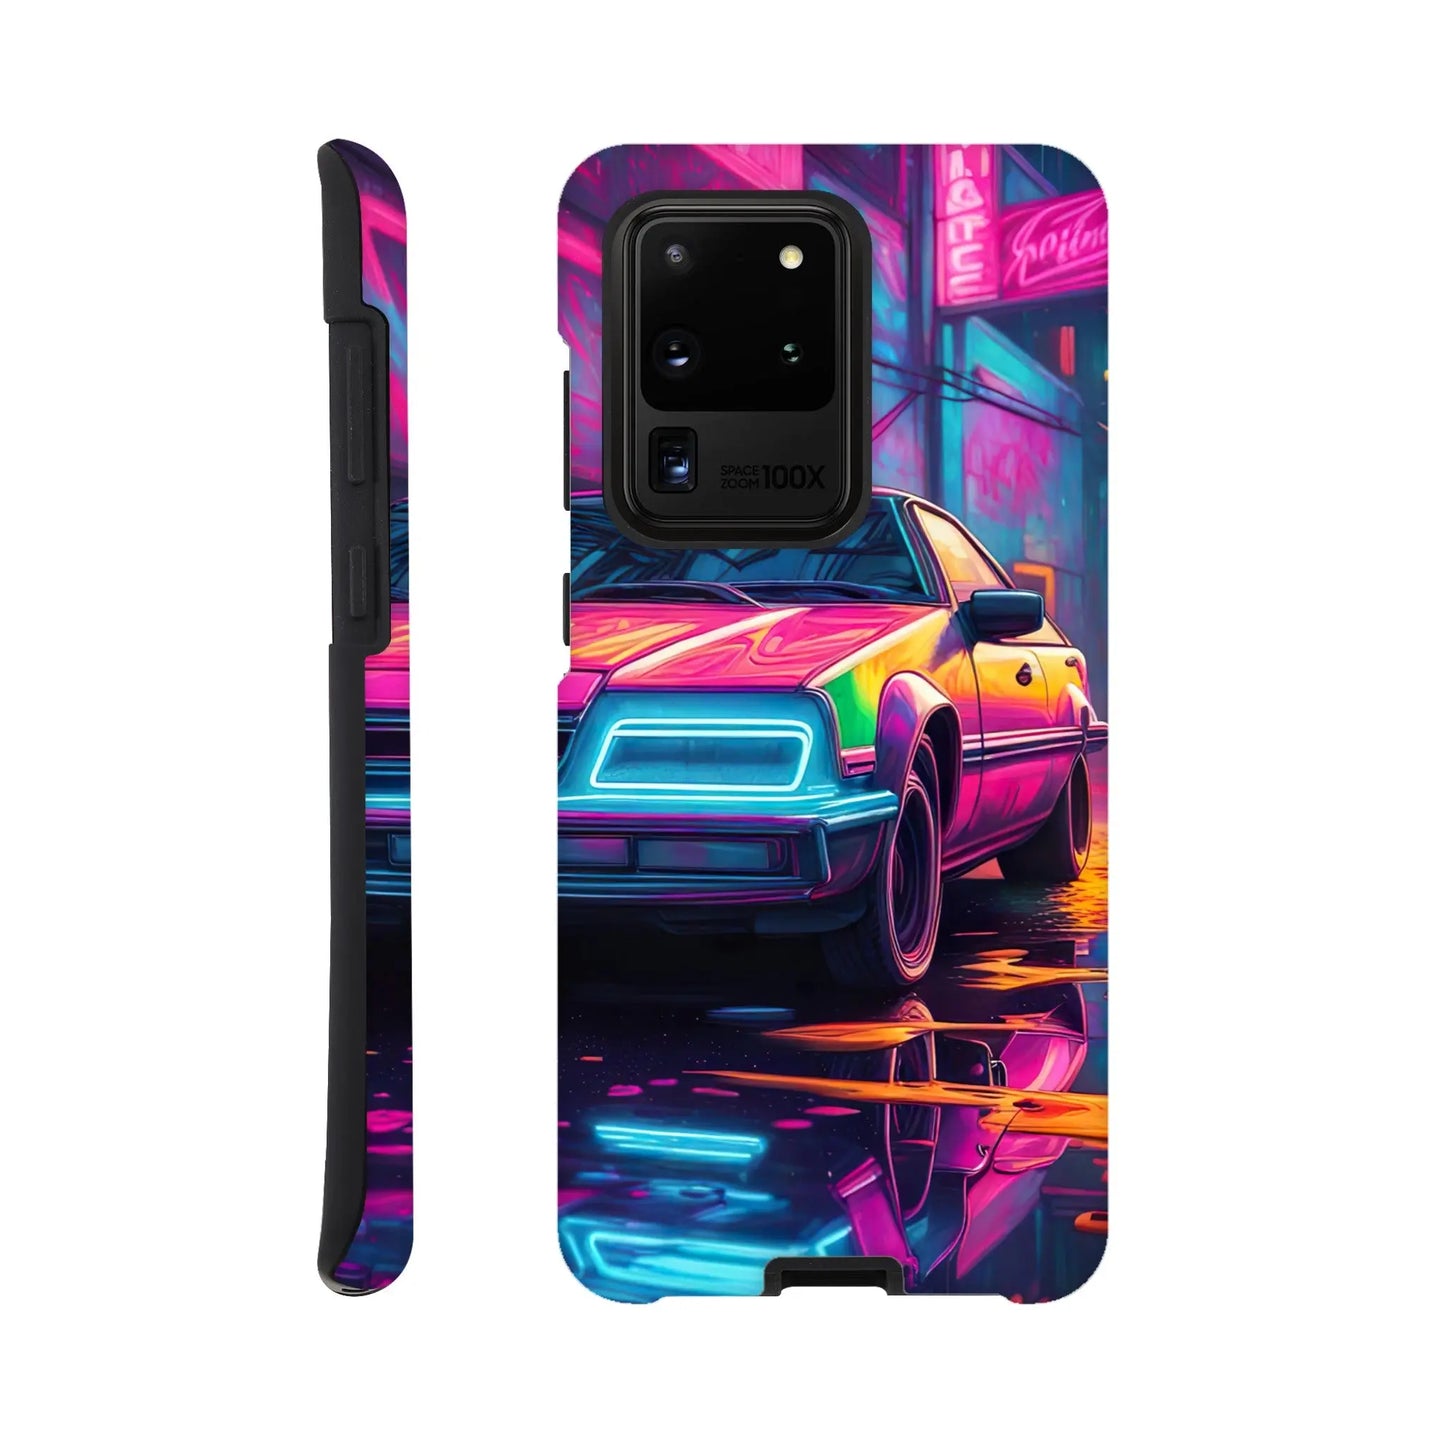 Smartphone-Hülle "Hart" - Retro Auto - Neon Stil, KI-Kunst RolConArt, Neon, Galaxy-S20-Ultra